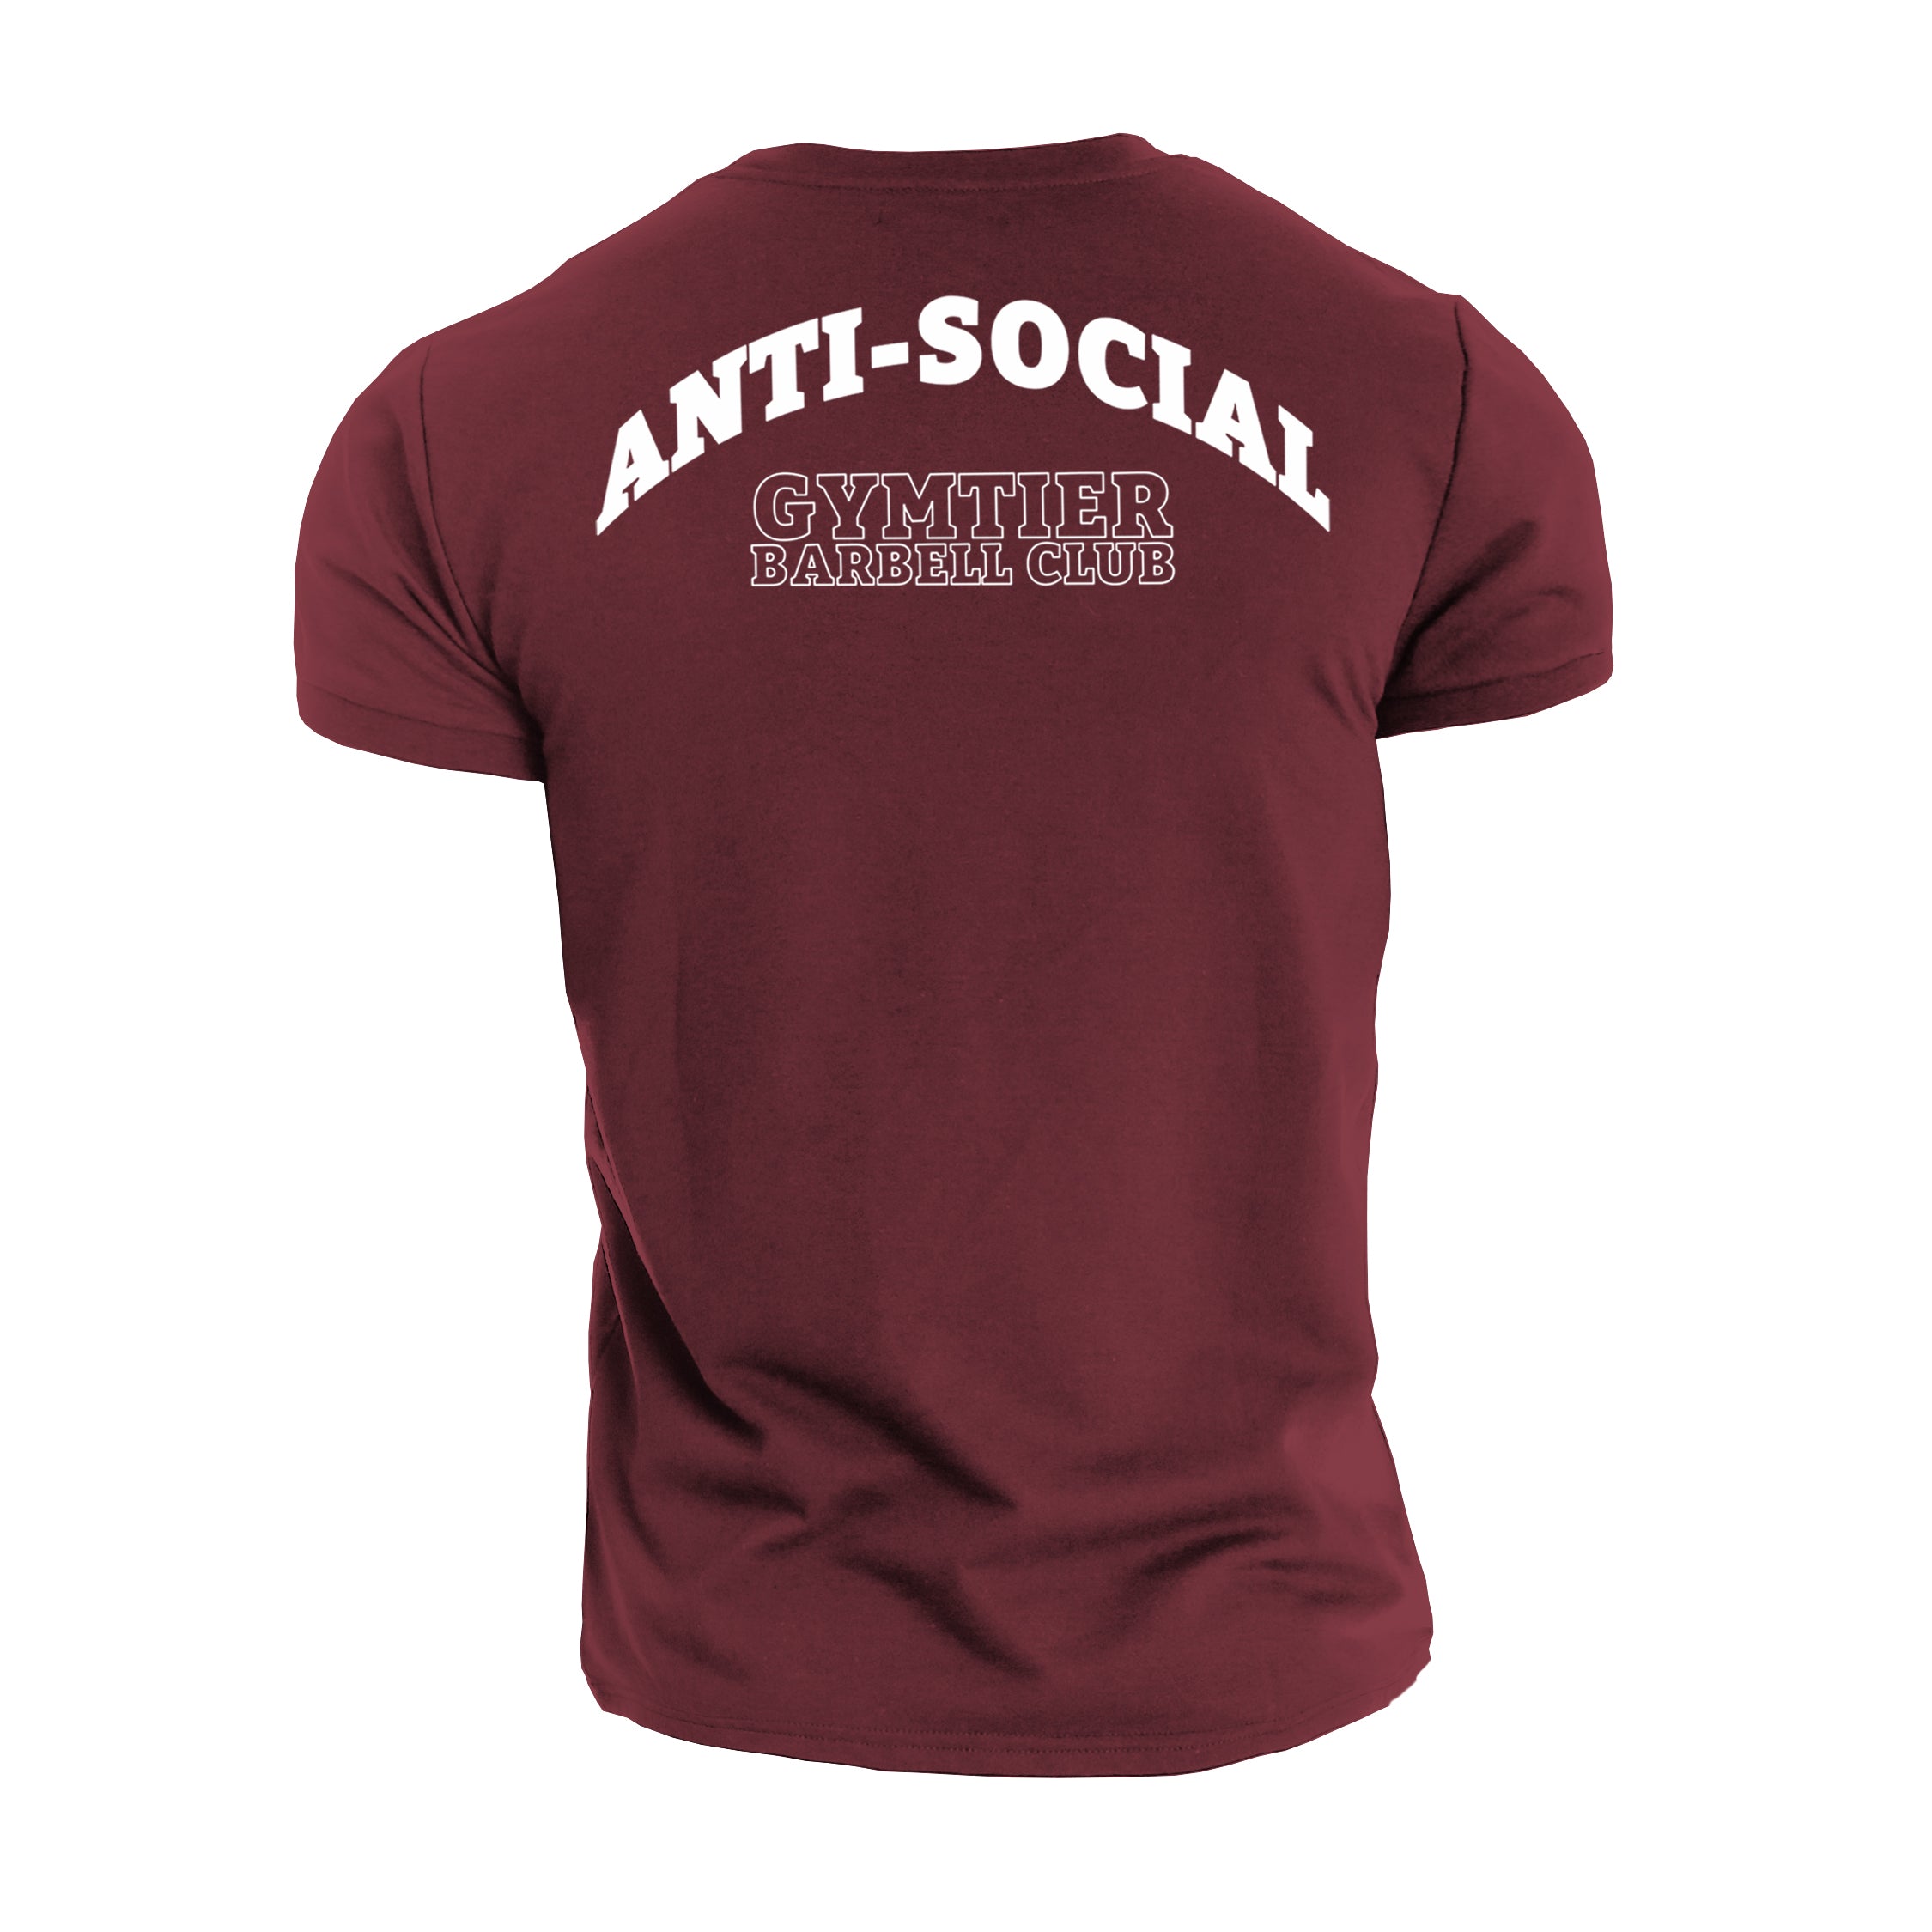 Gymtier Barbell Club - Anti-Social - Gym T-Shirt